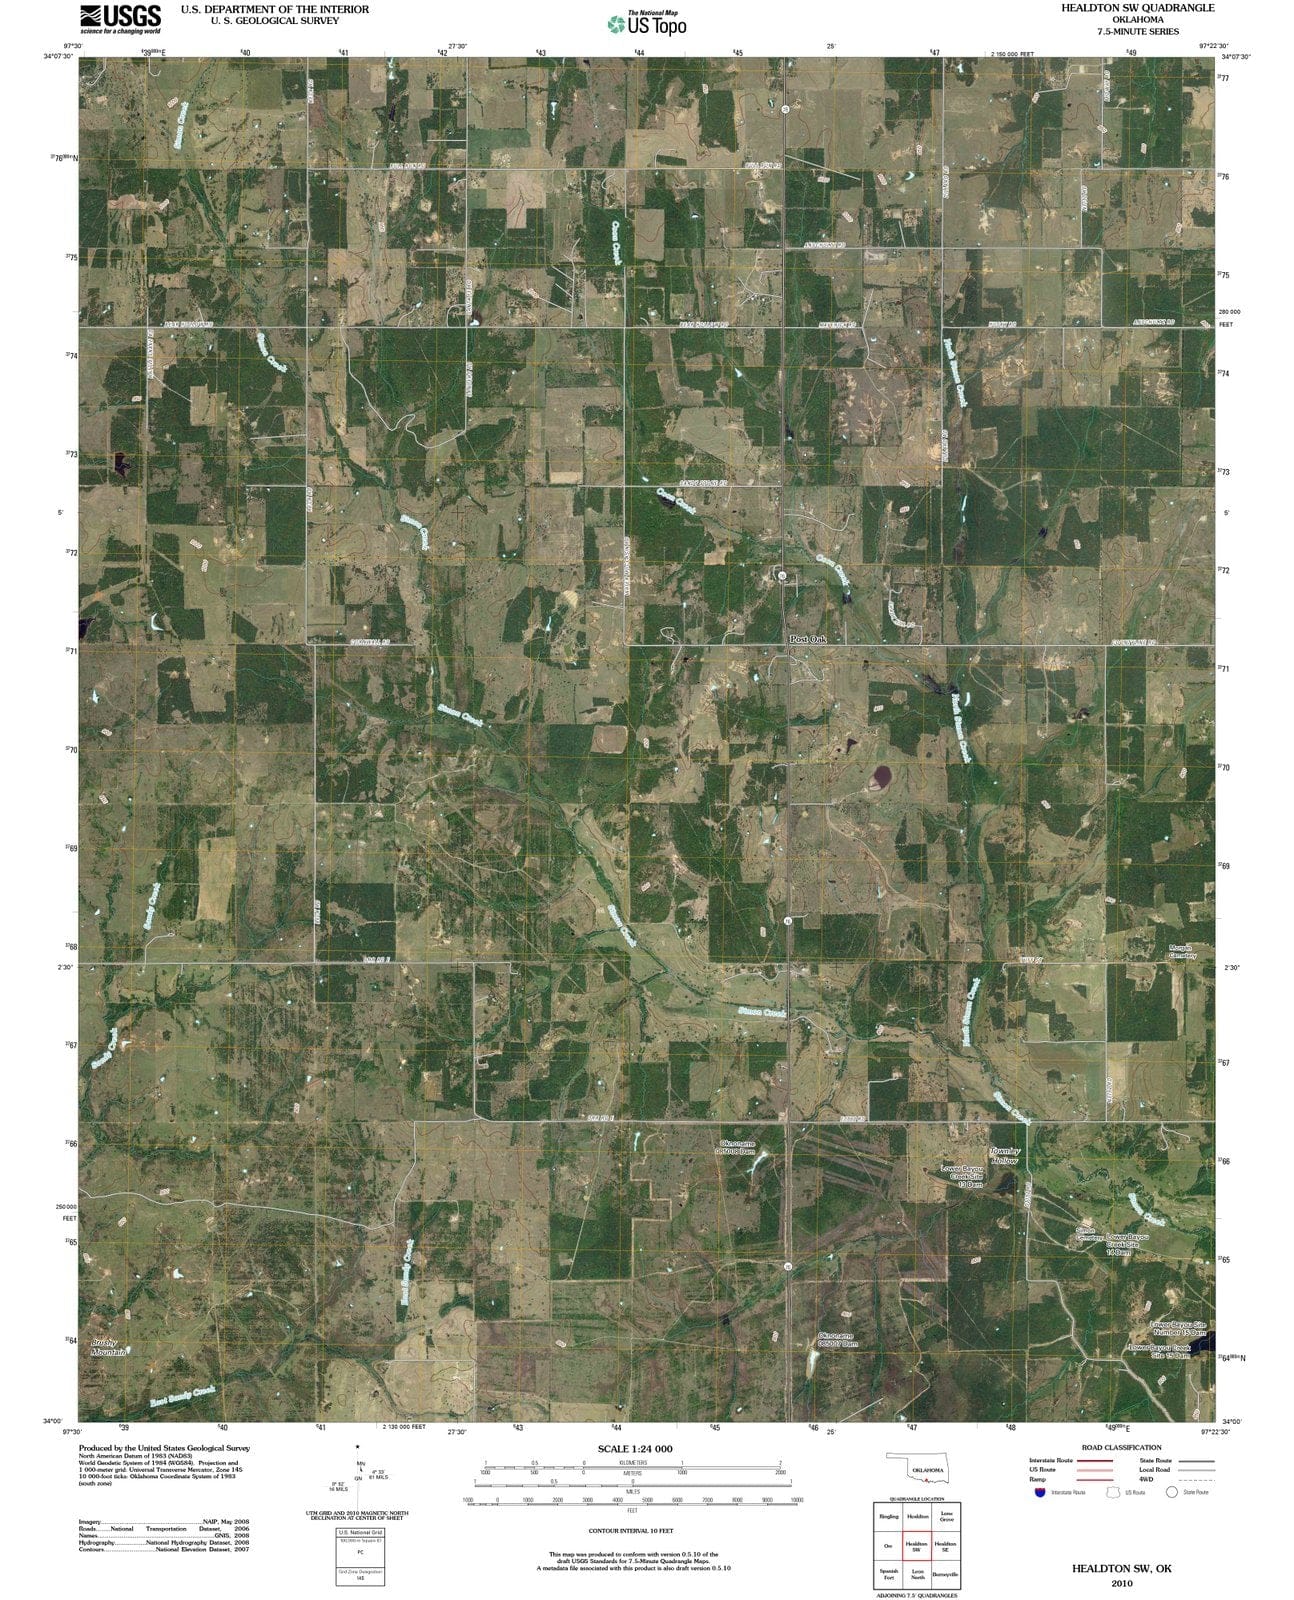 2010 Healdton, OK - Oklahoma - USGS Topographic Map